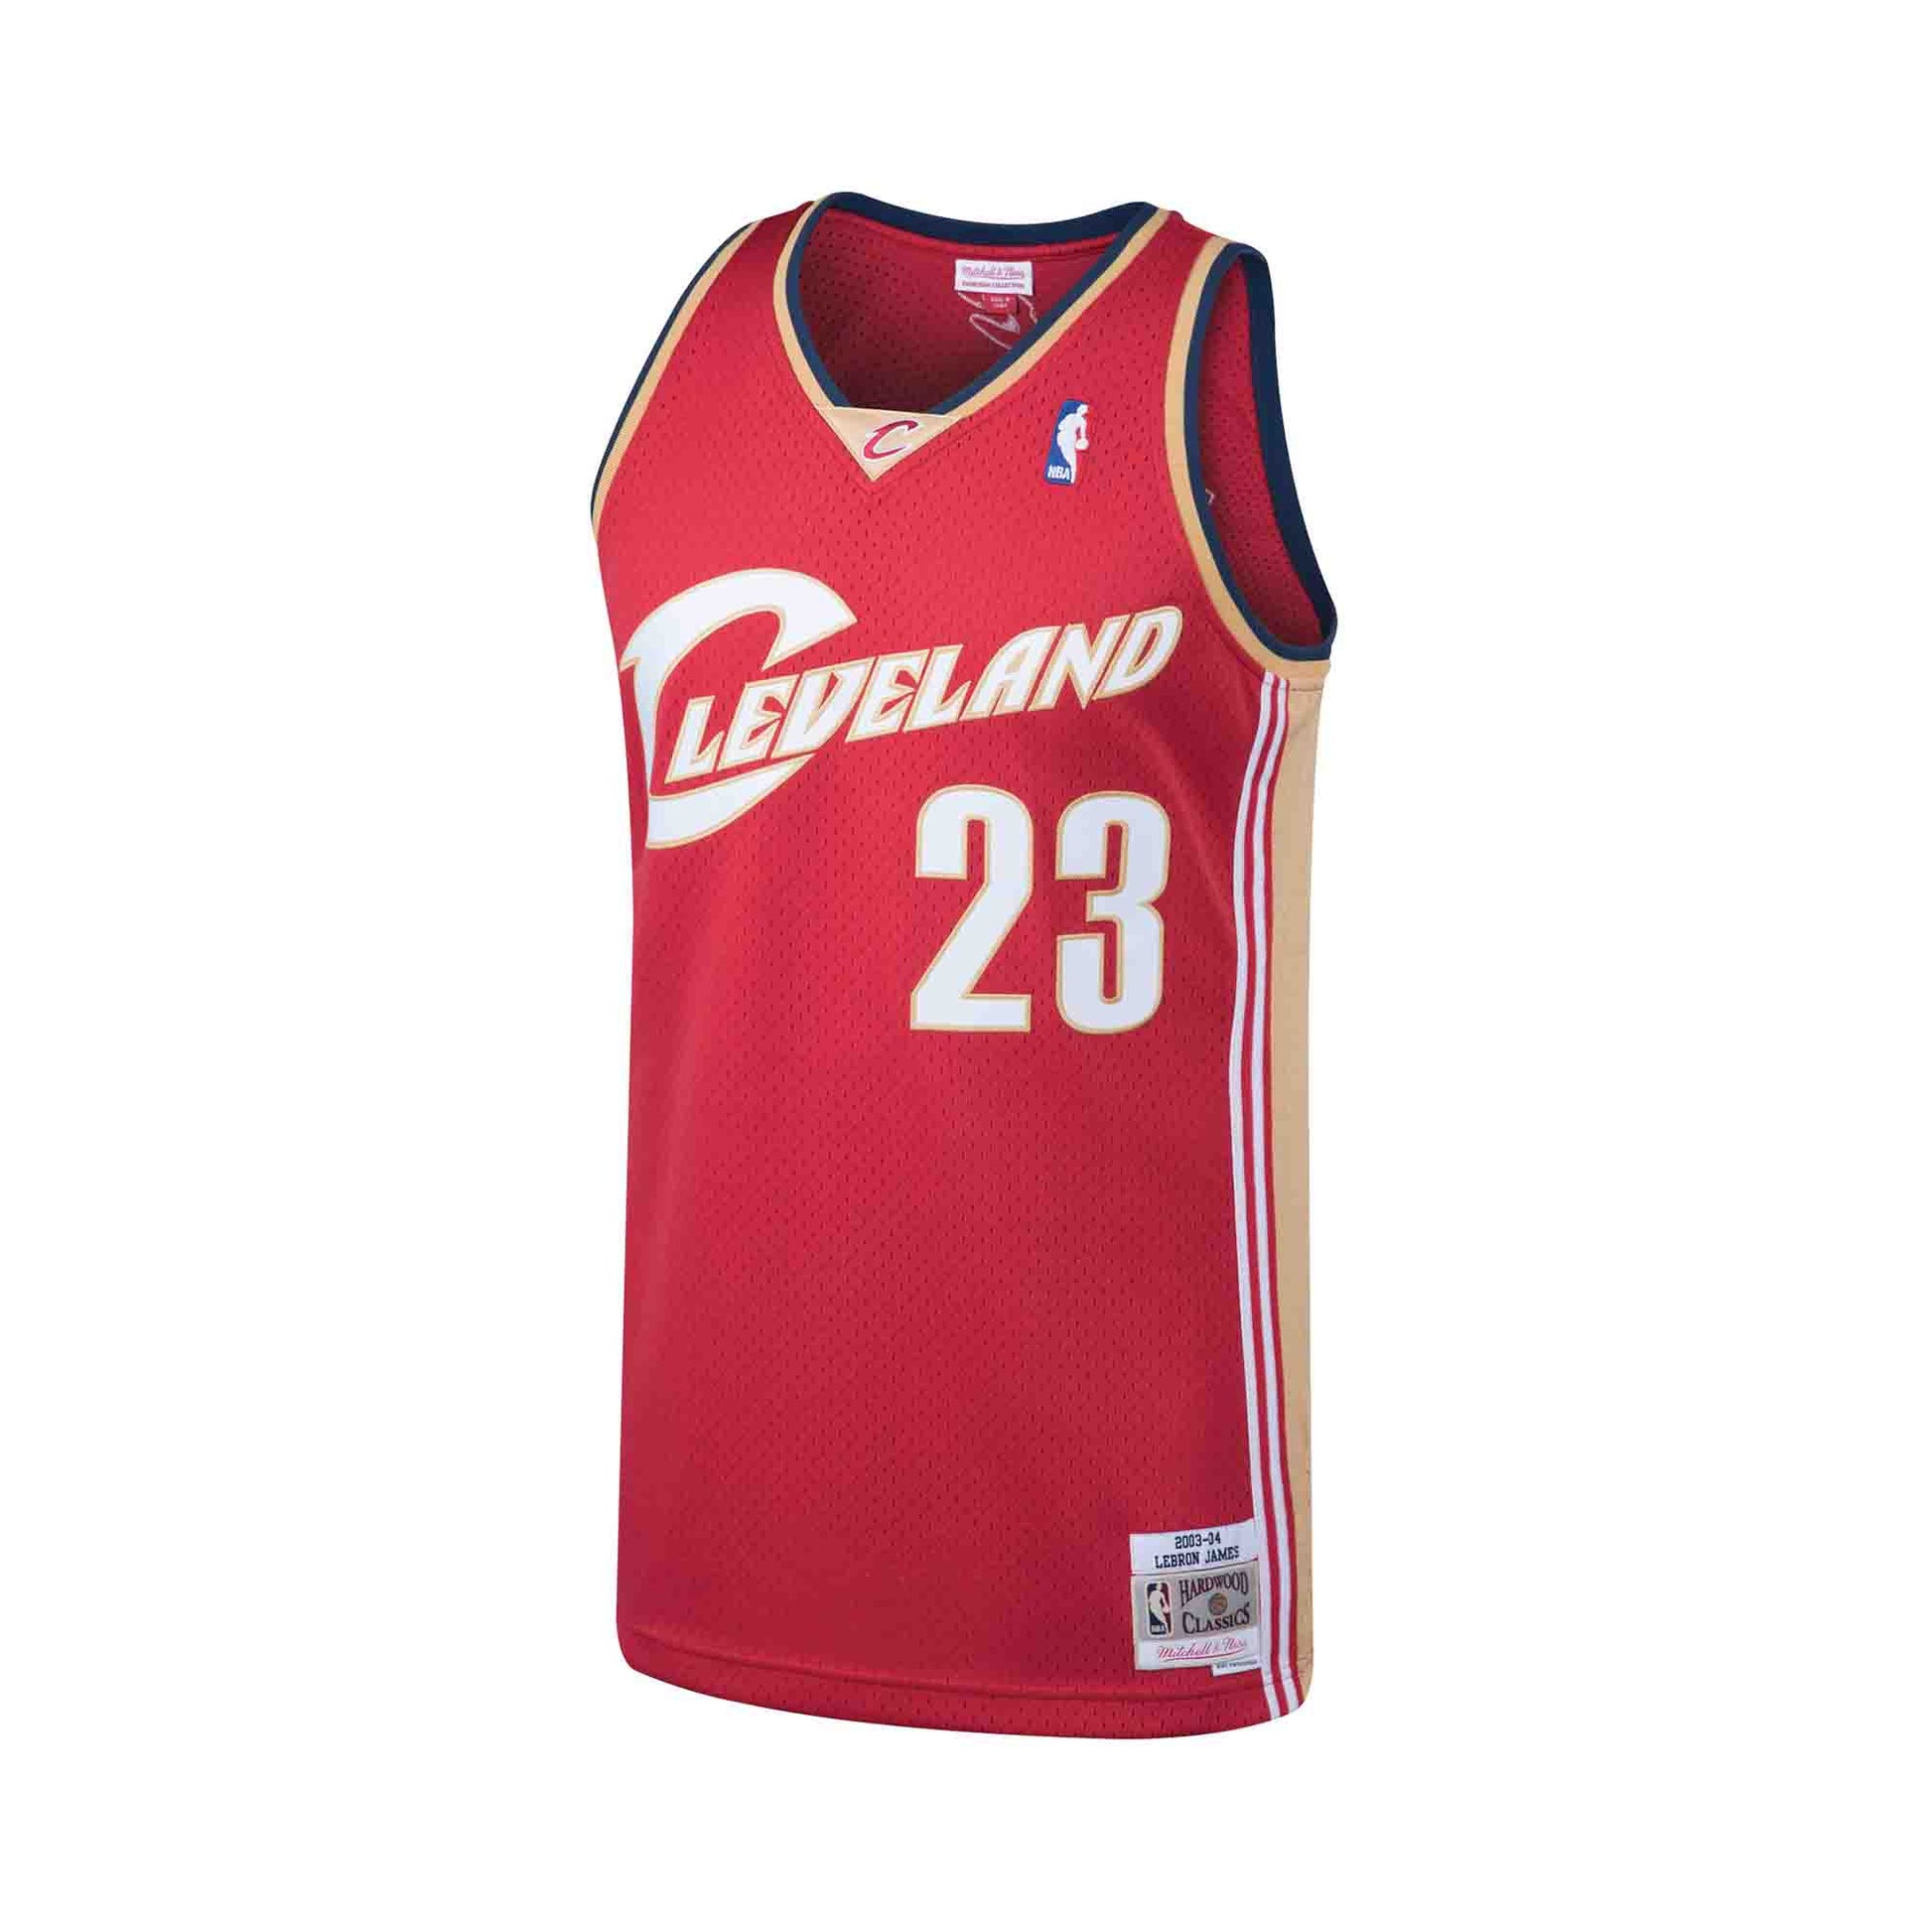 adidas Mens Cleveland Cavaliers LeBron James #23 NBA Jersey-White/Red,Medium